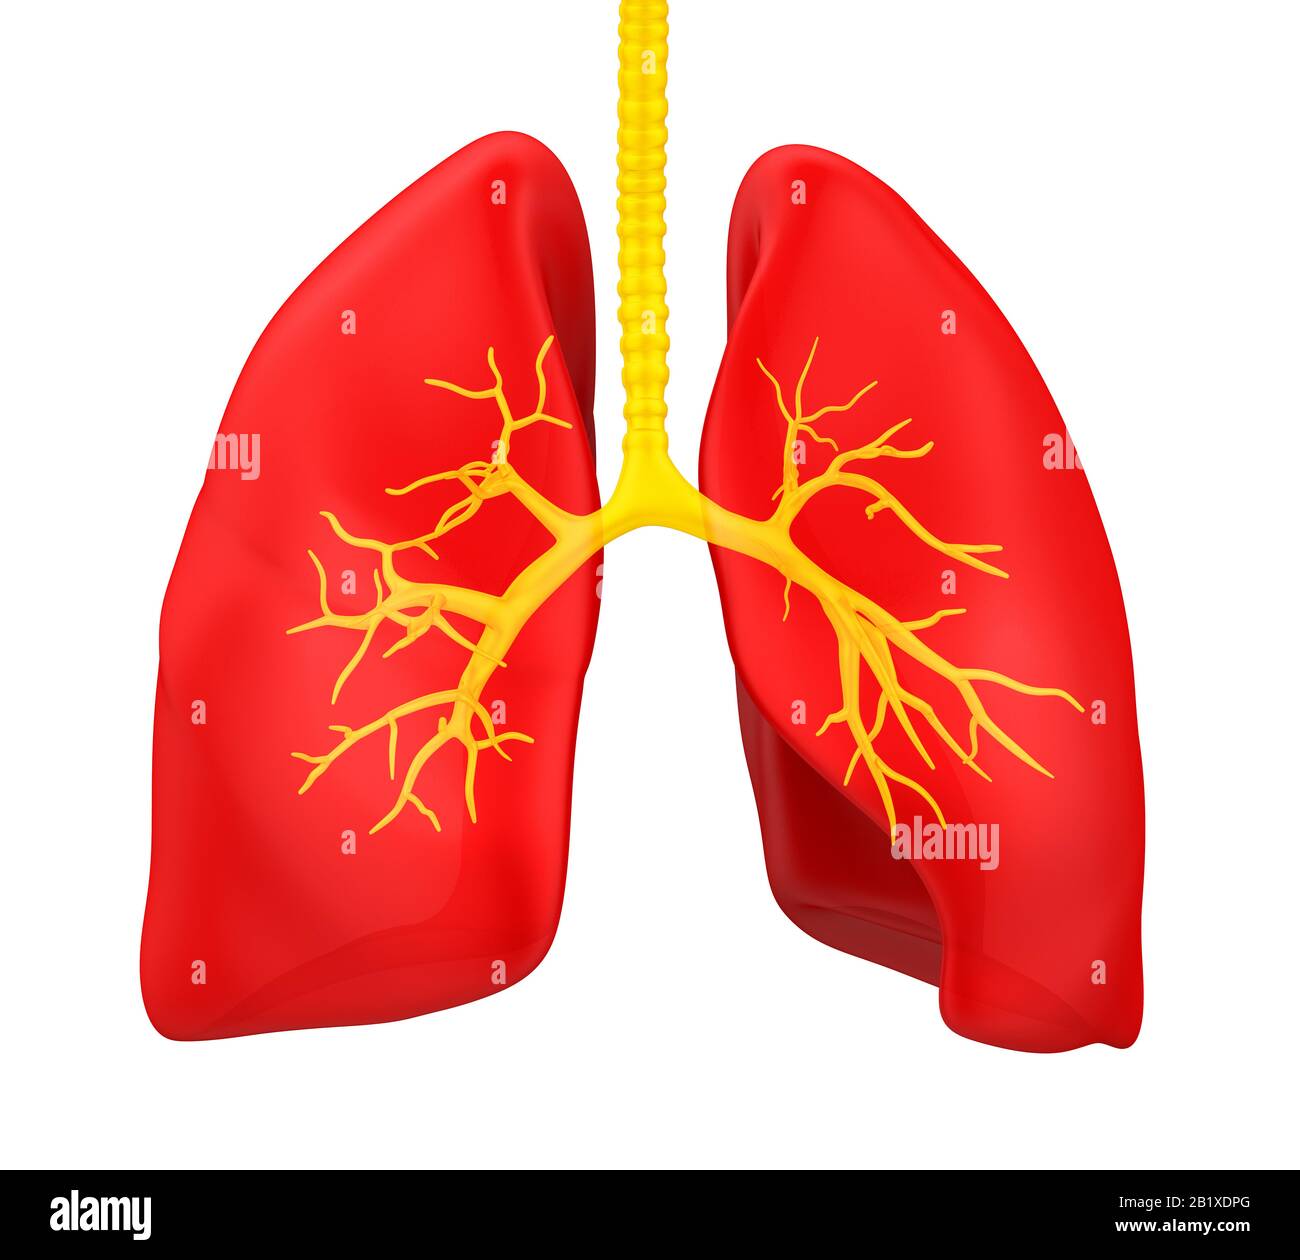 Human Lung Anatomy Illustration Stock Photo